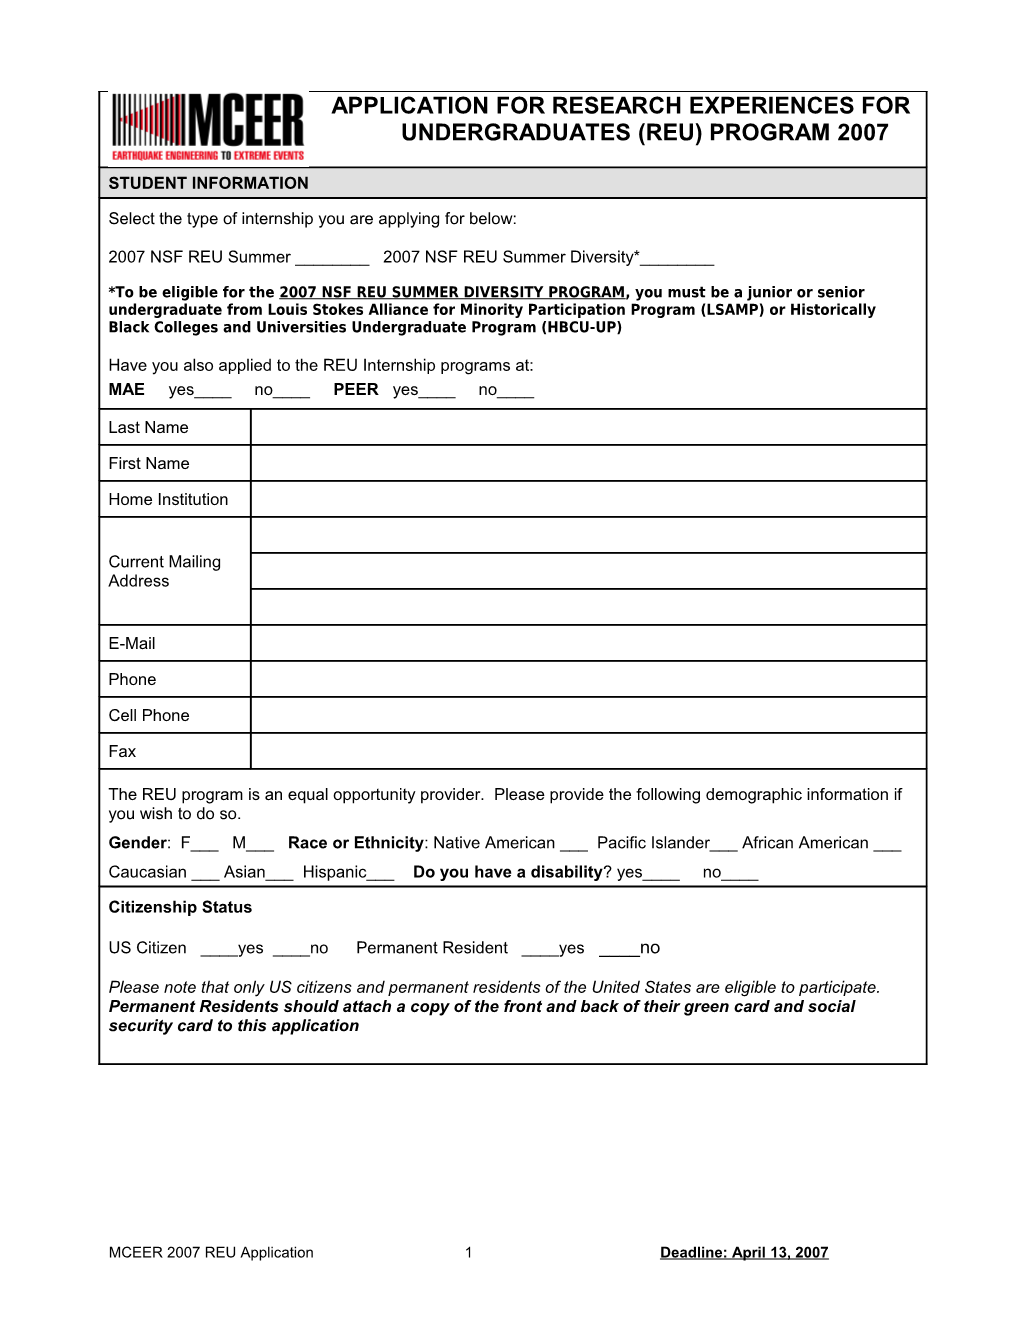 Application for Research Experiences for Undergraduates (Reu) Program 2007